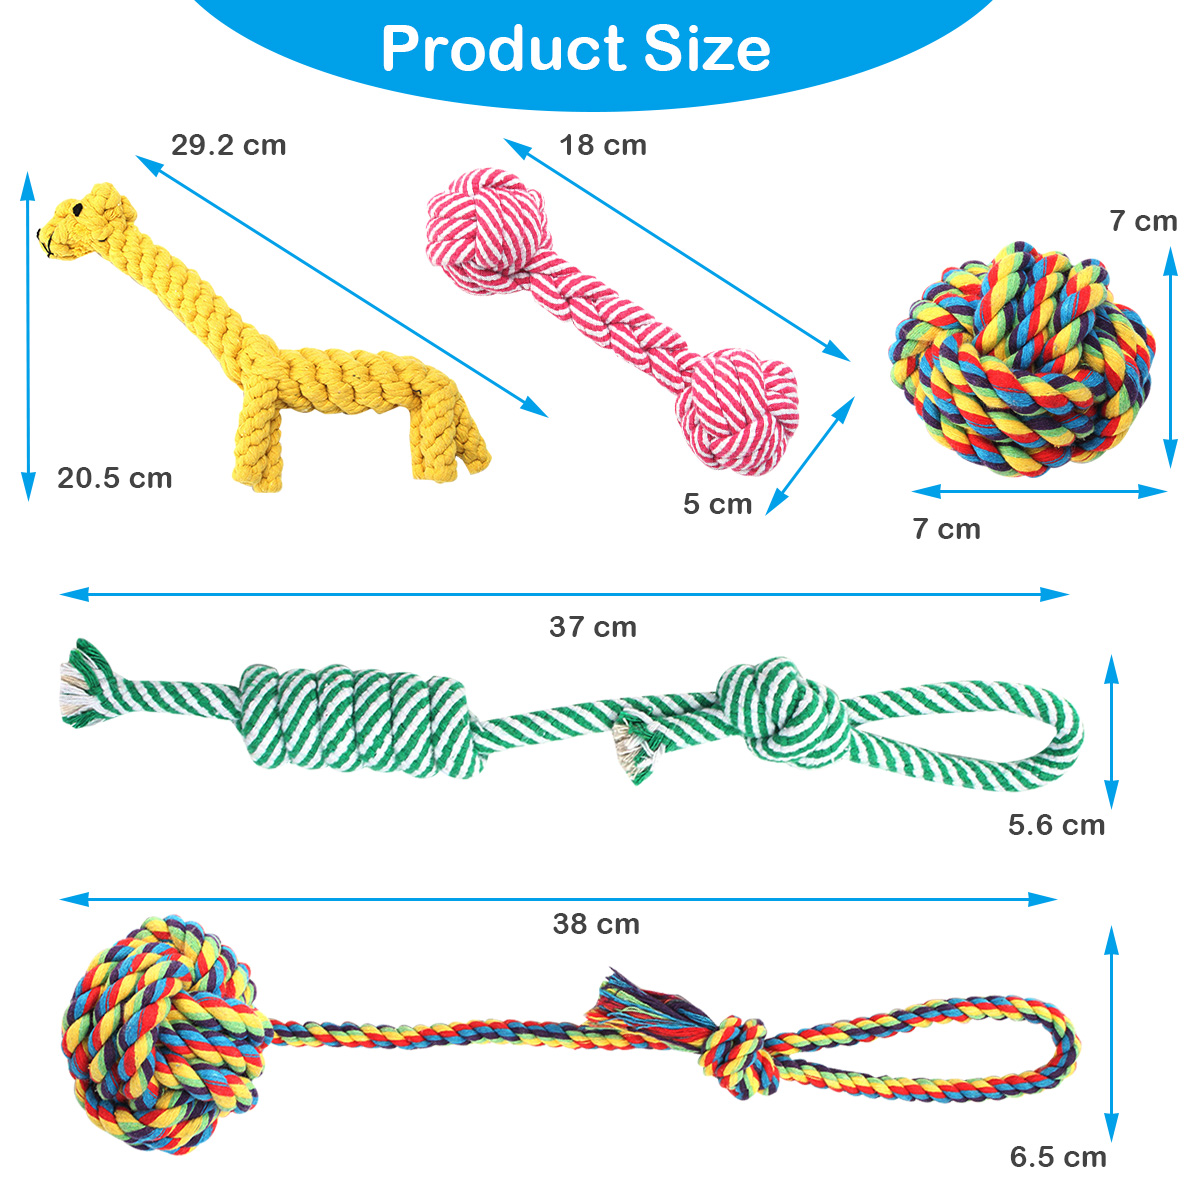 Braided-Cotton-Rope-Bone-Pet-Dog-Interactive-Toys-Dogs-Chews-Bite-Training-Cat-Puppy-Supplies-1304812-1